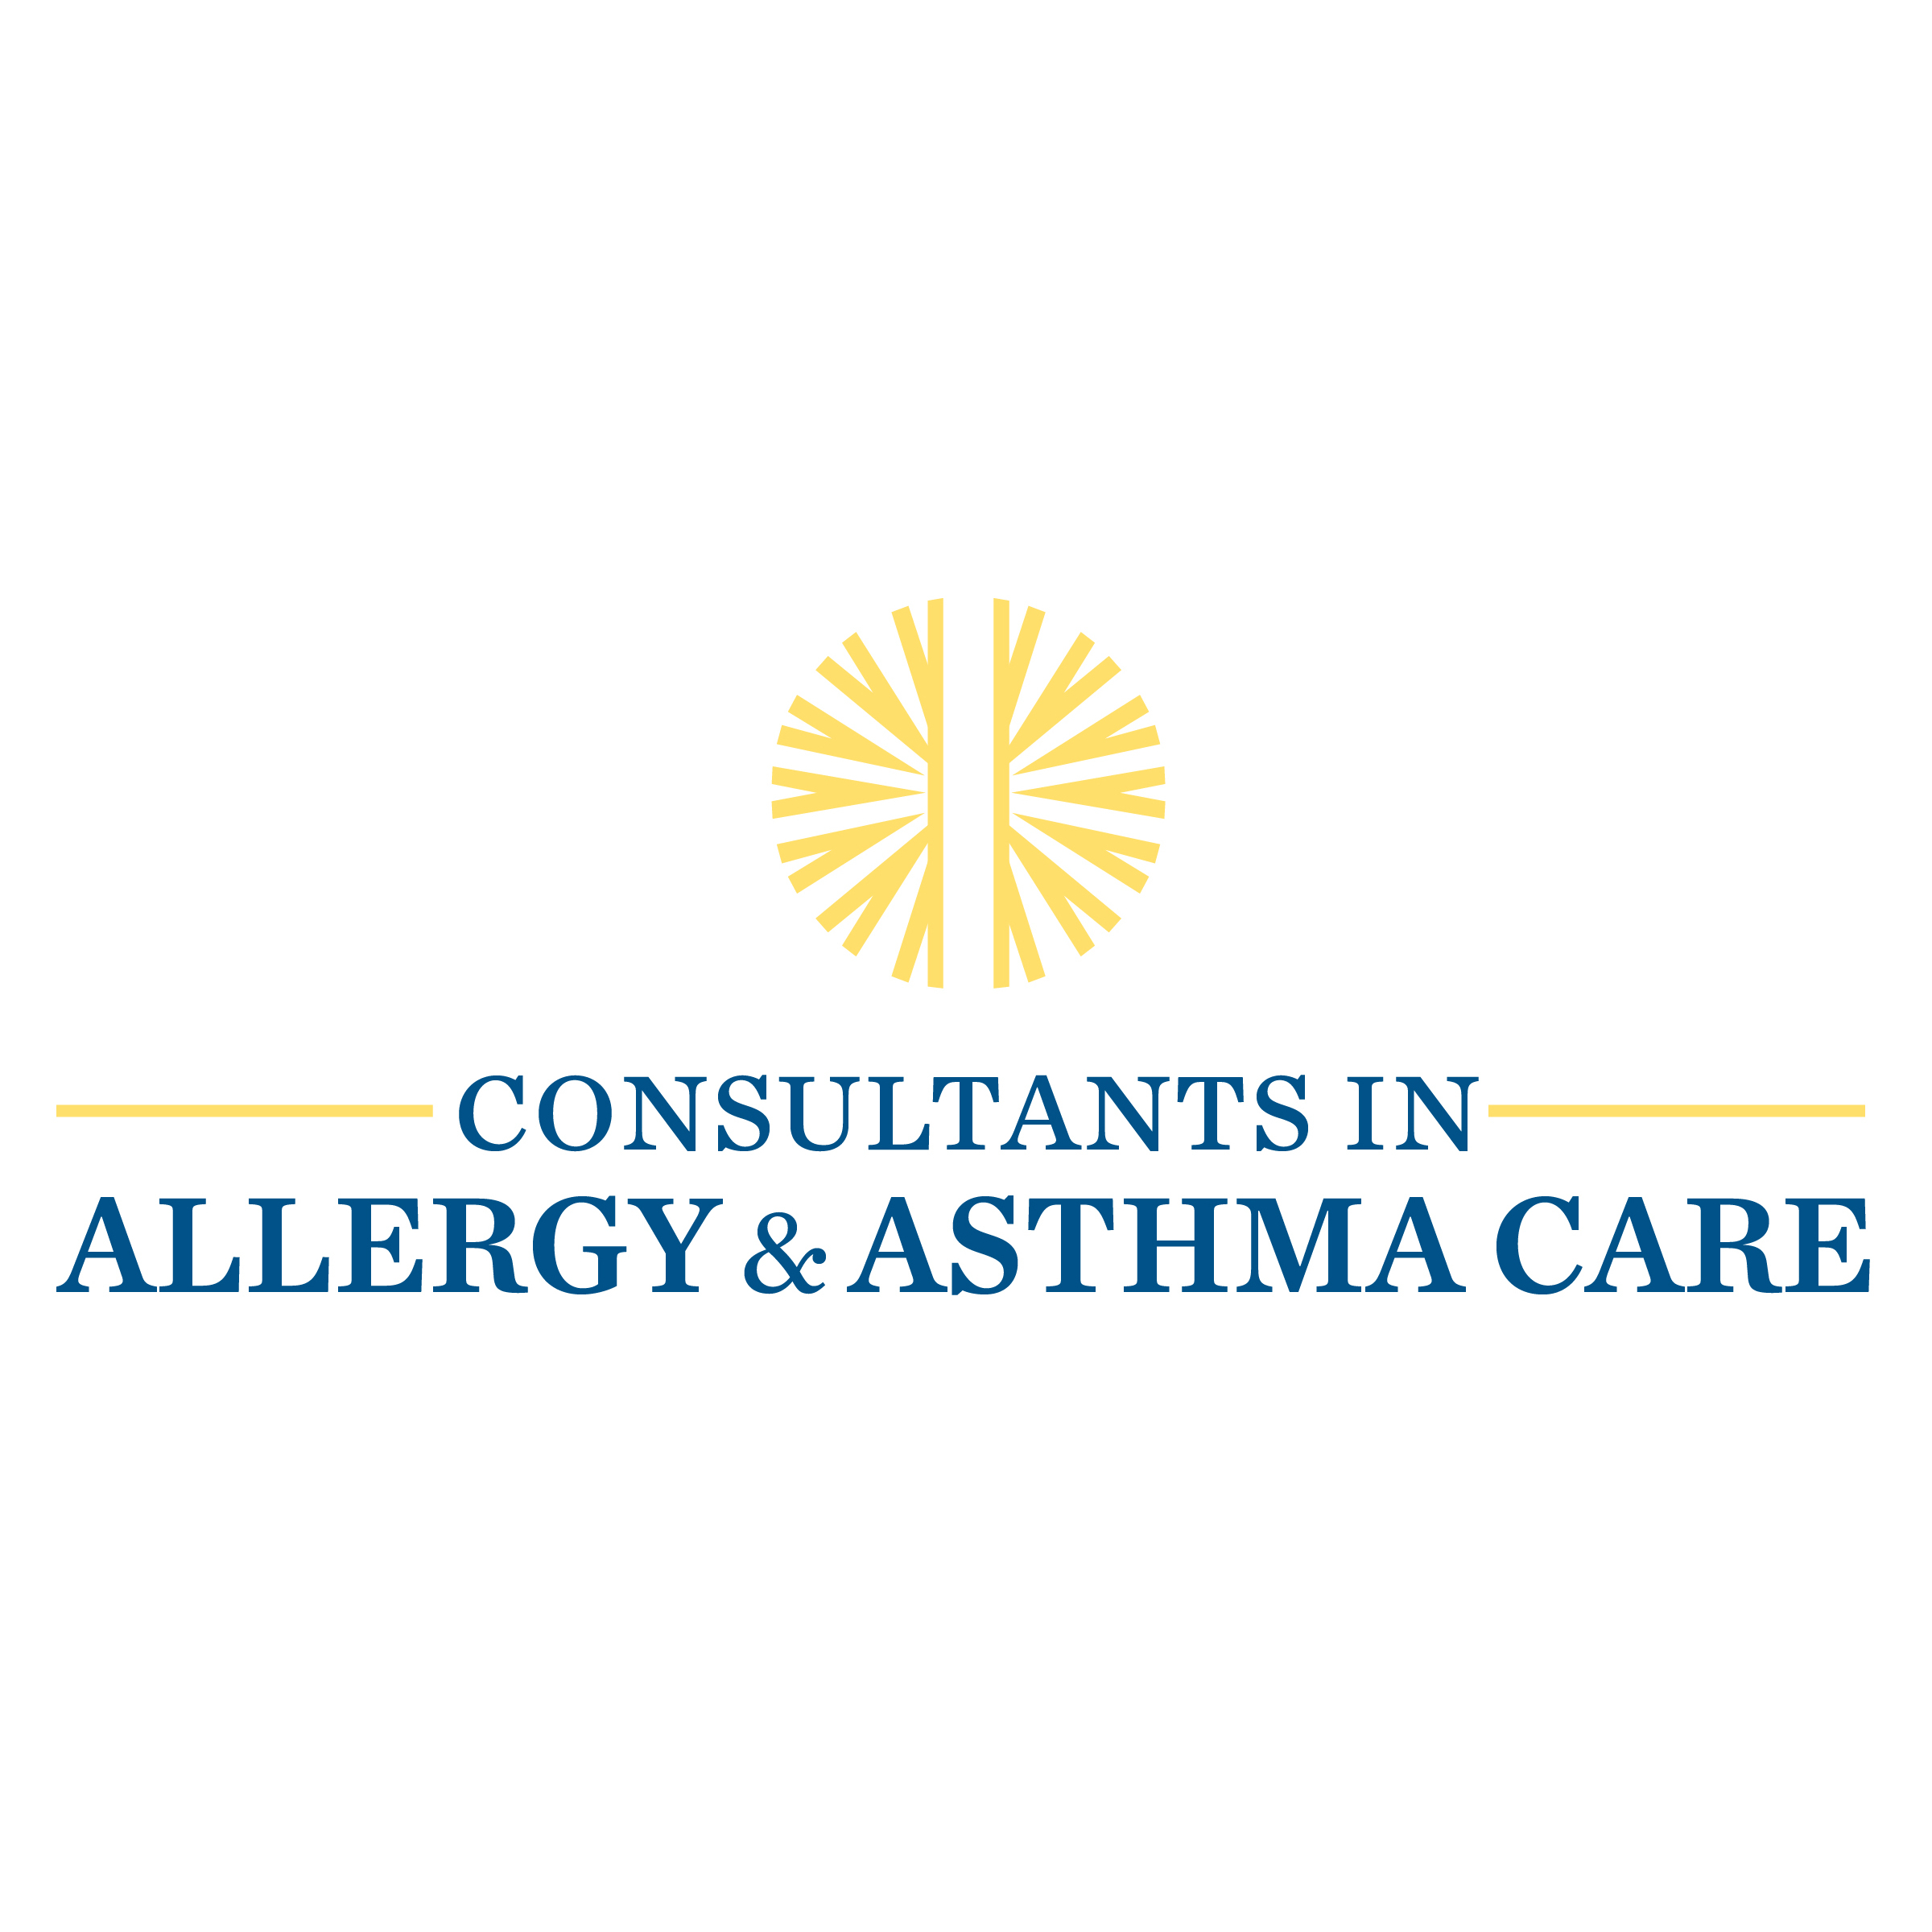 Joel S. Klein, M.D. Consultants in Allergy & Asthma Care, LLC